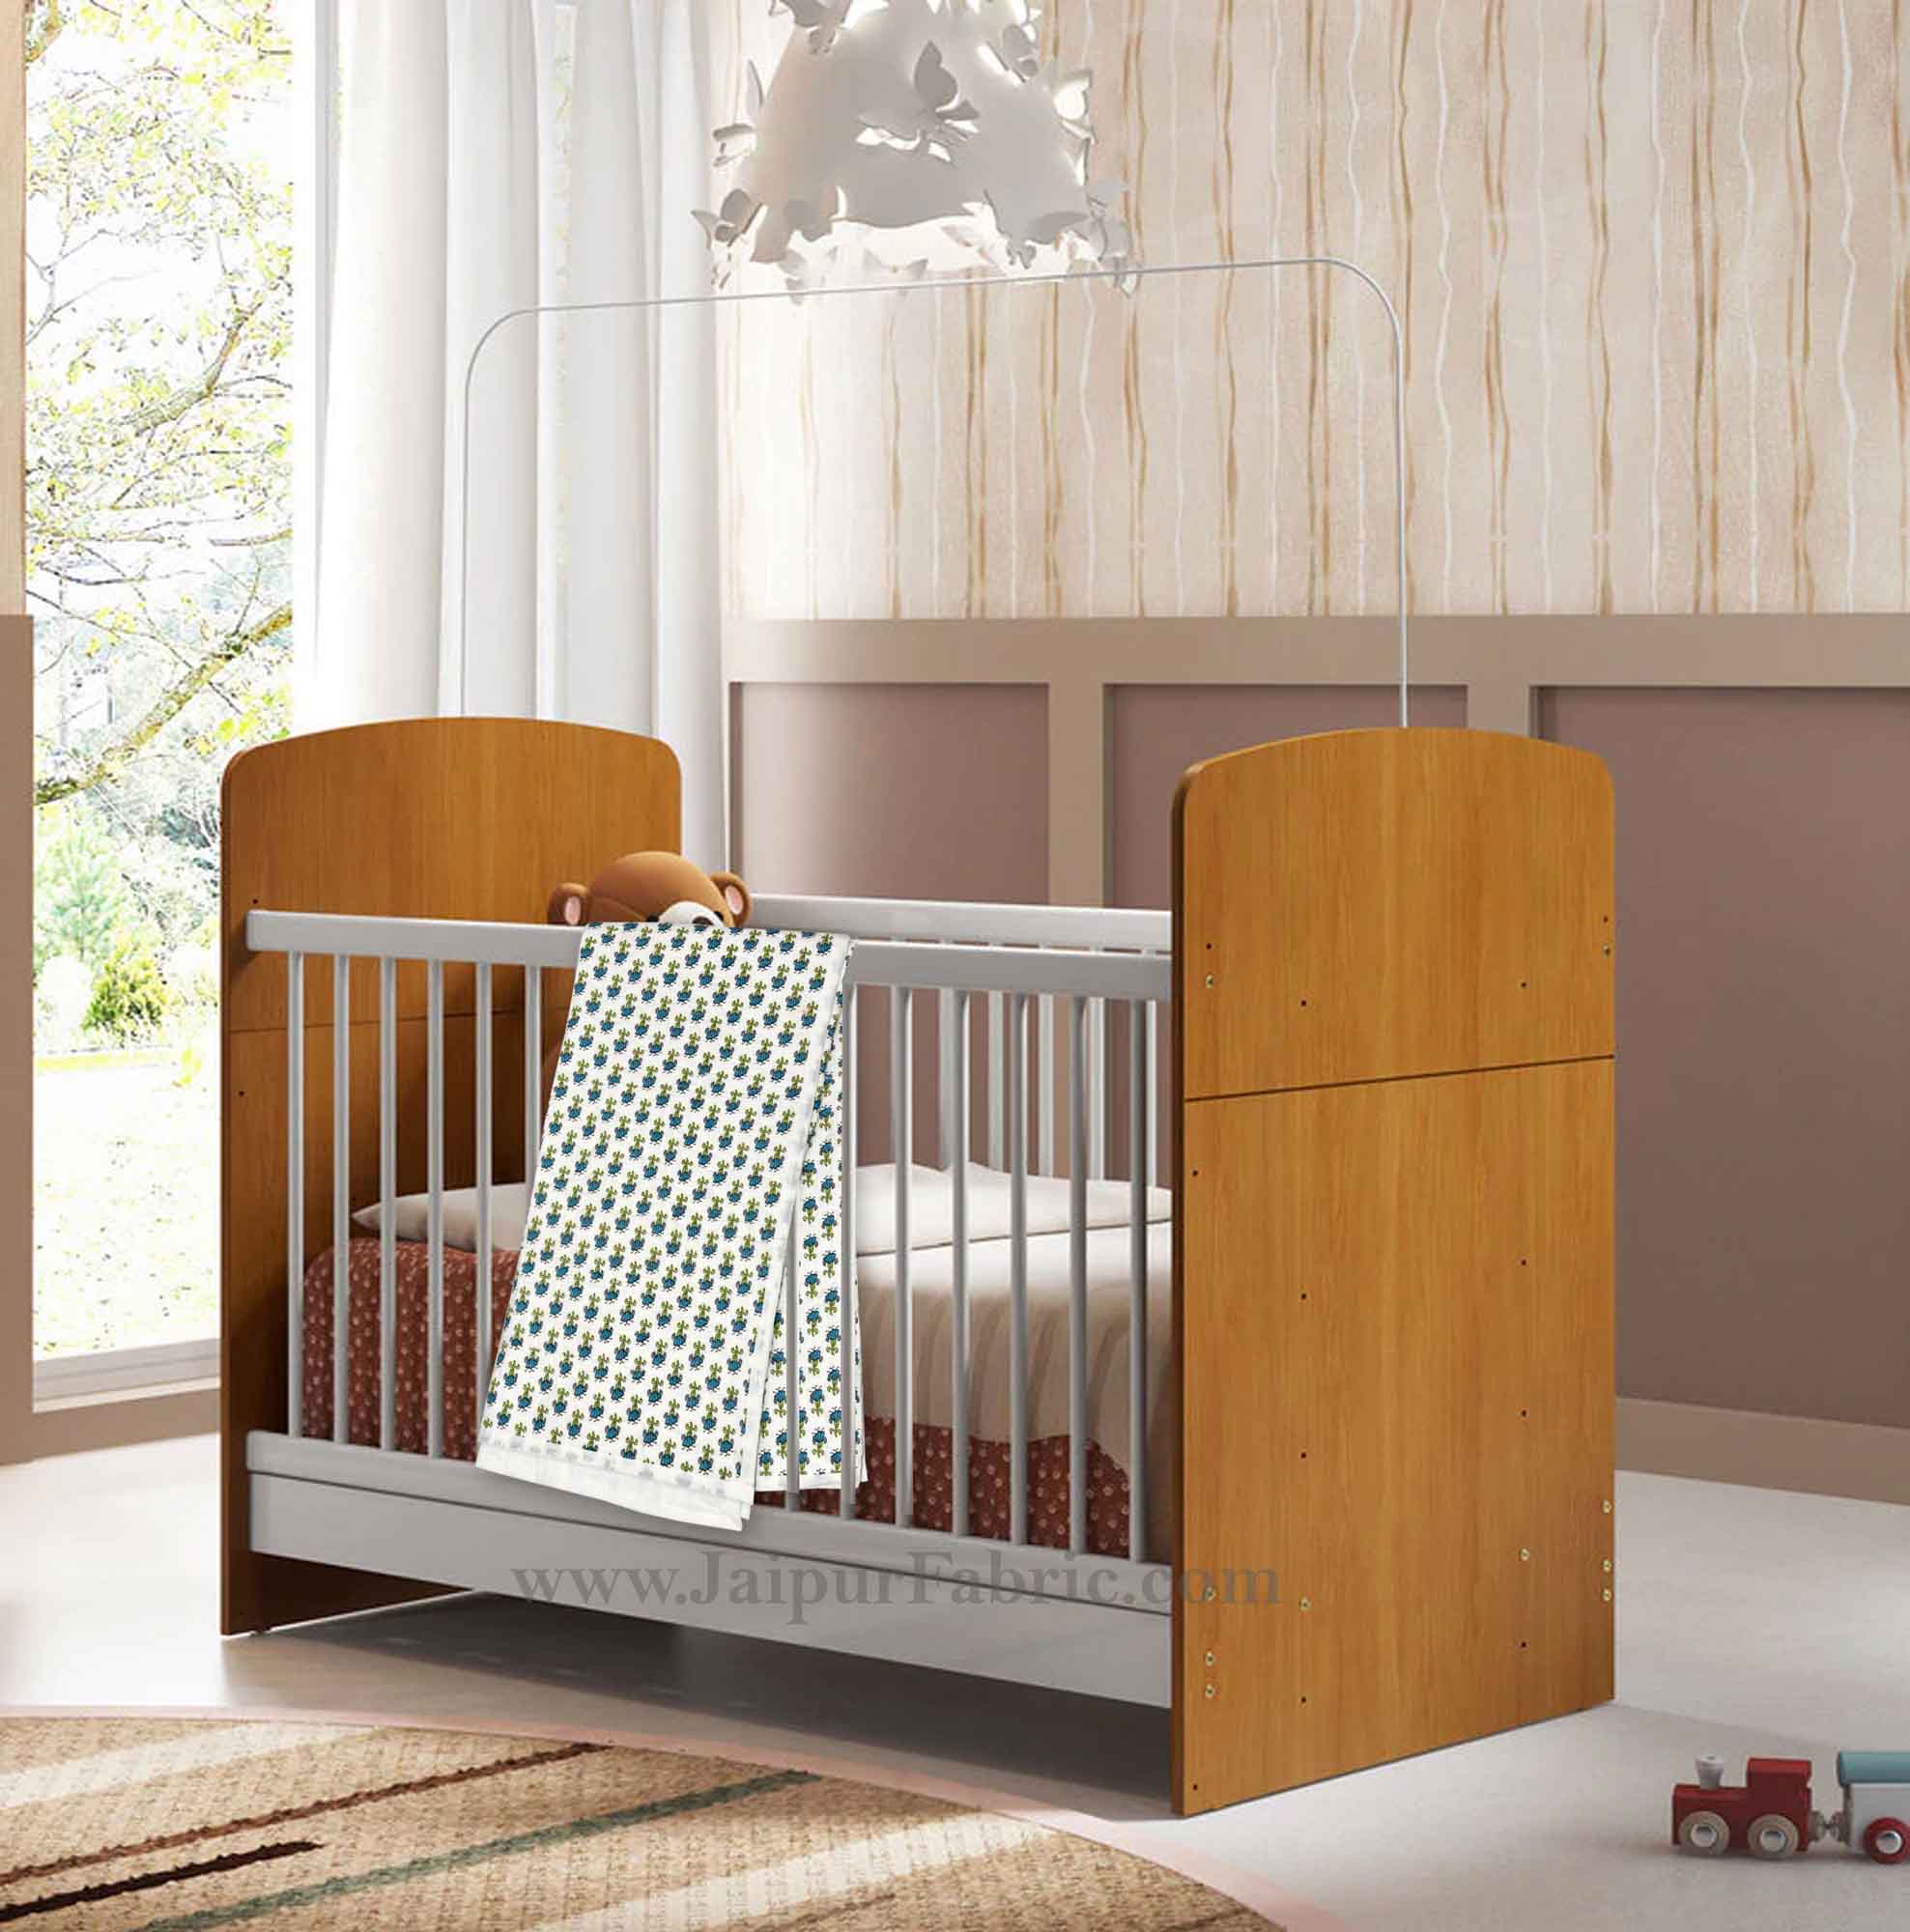 Newborn Baby Soft Green & Blue Colourful Crib Comforter/Swaddling Blankets/Quilt, 120 x 120 cm Cream Base Baby Quilt